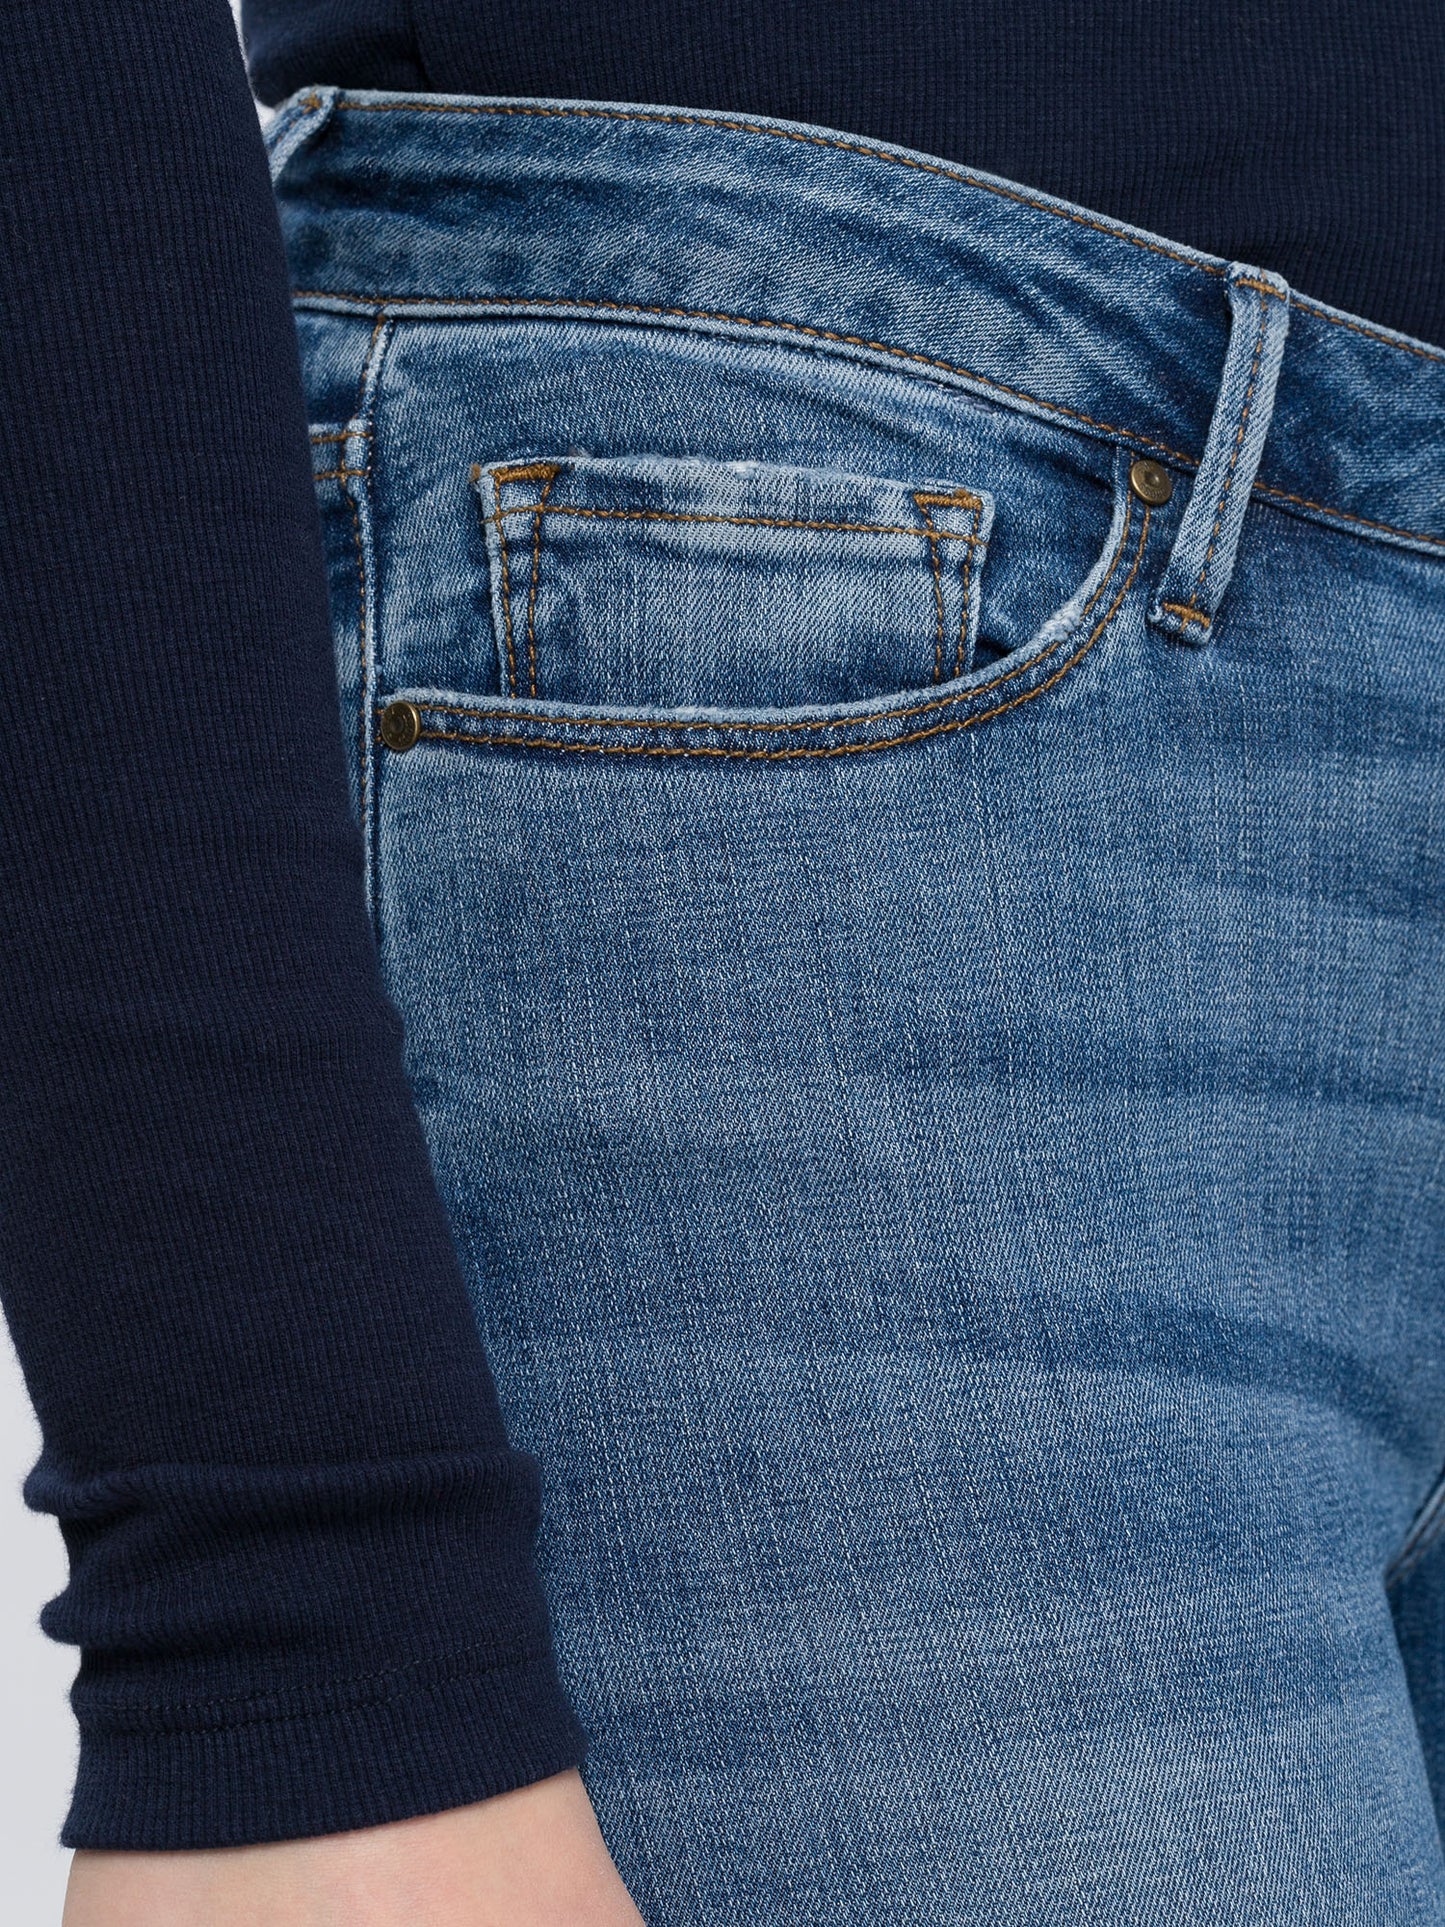 Alan women's jeans skinny fit high waist light blue